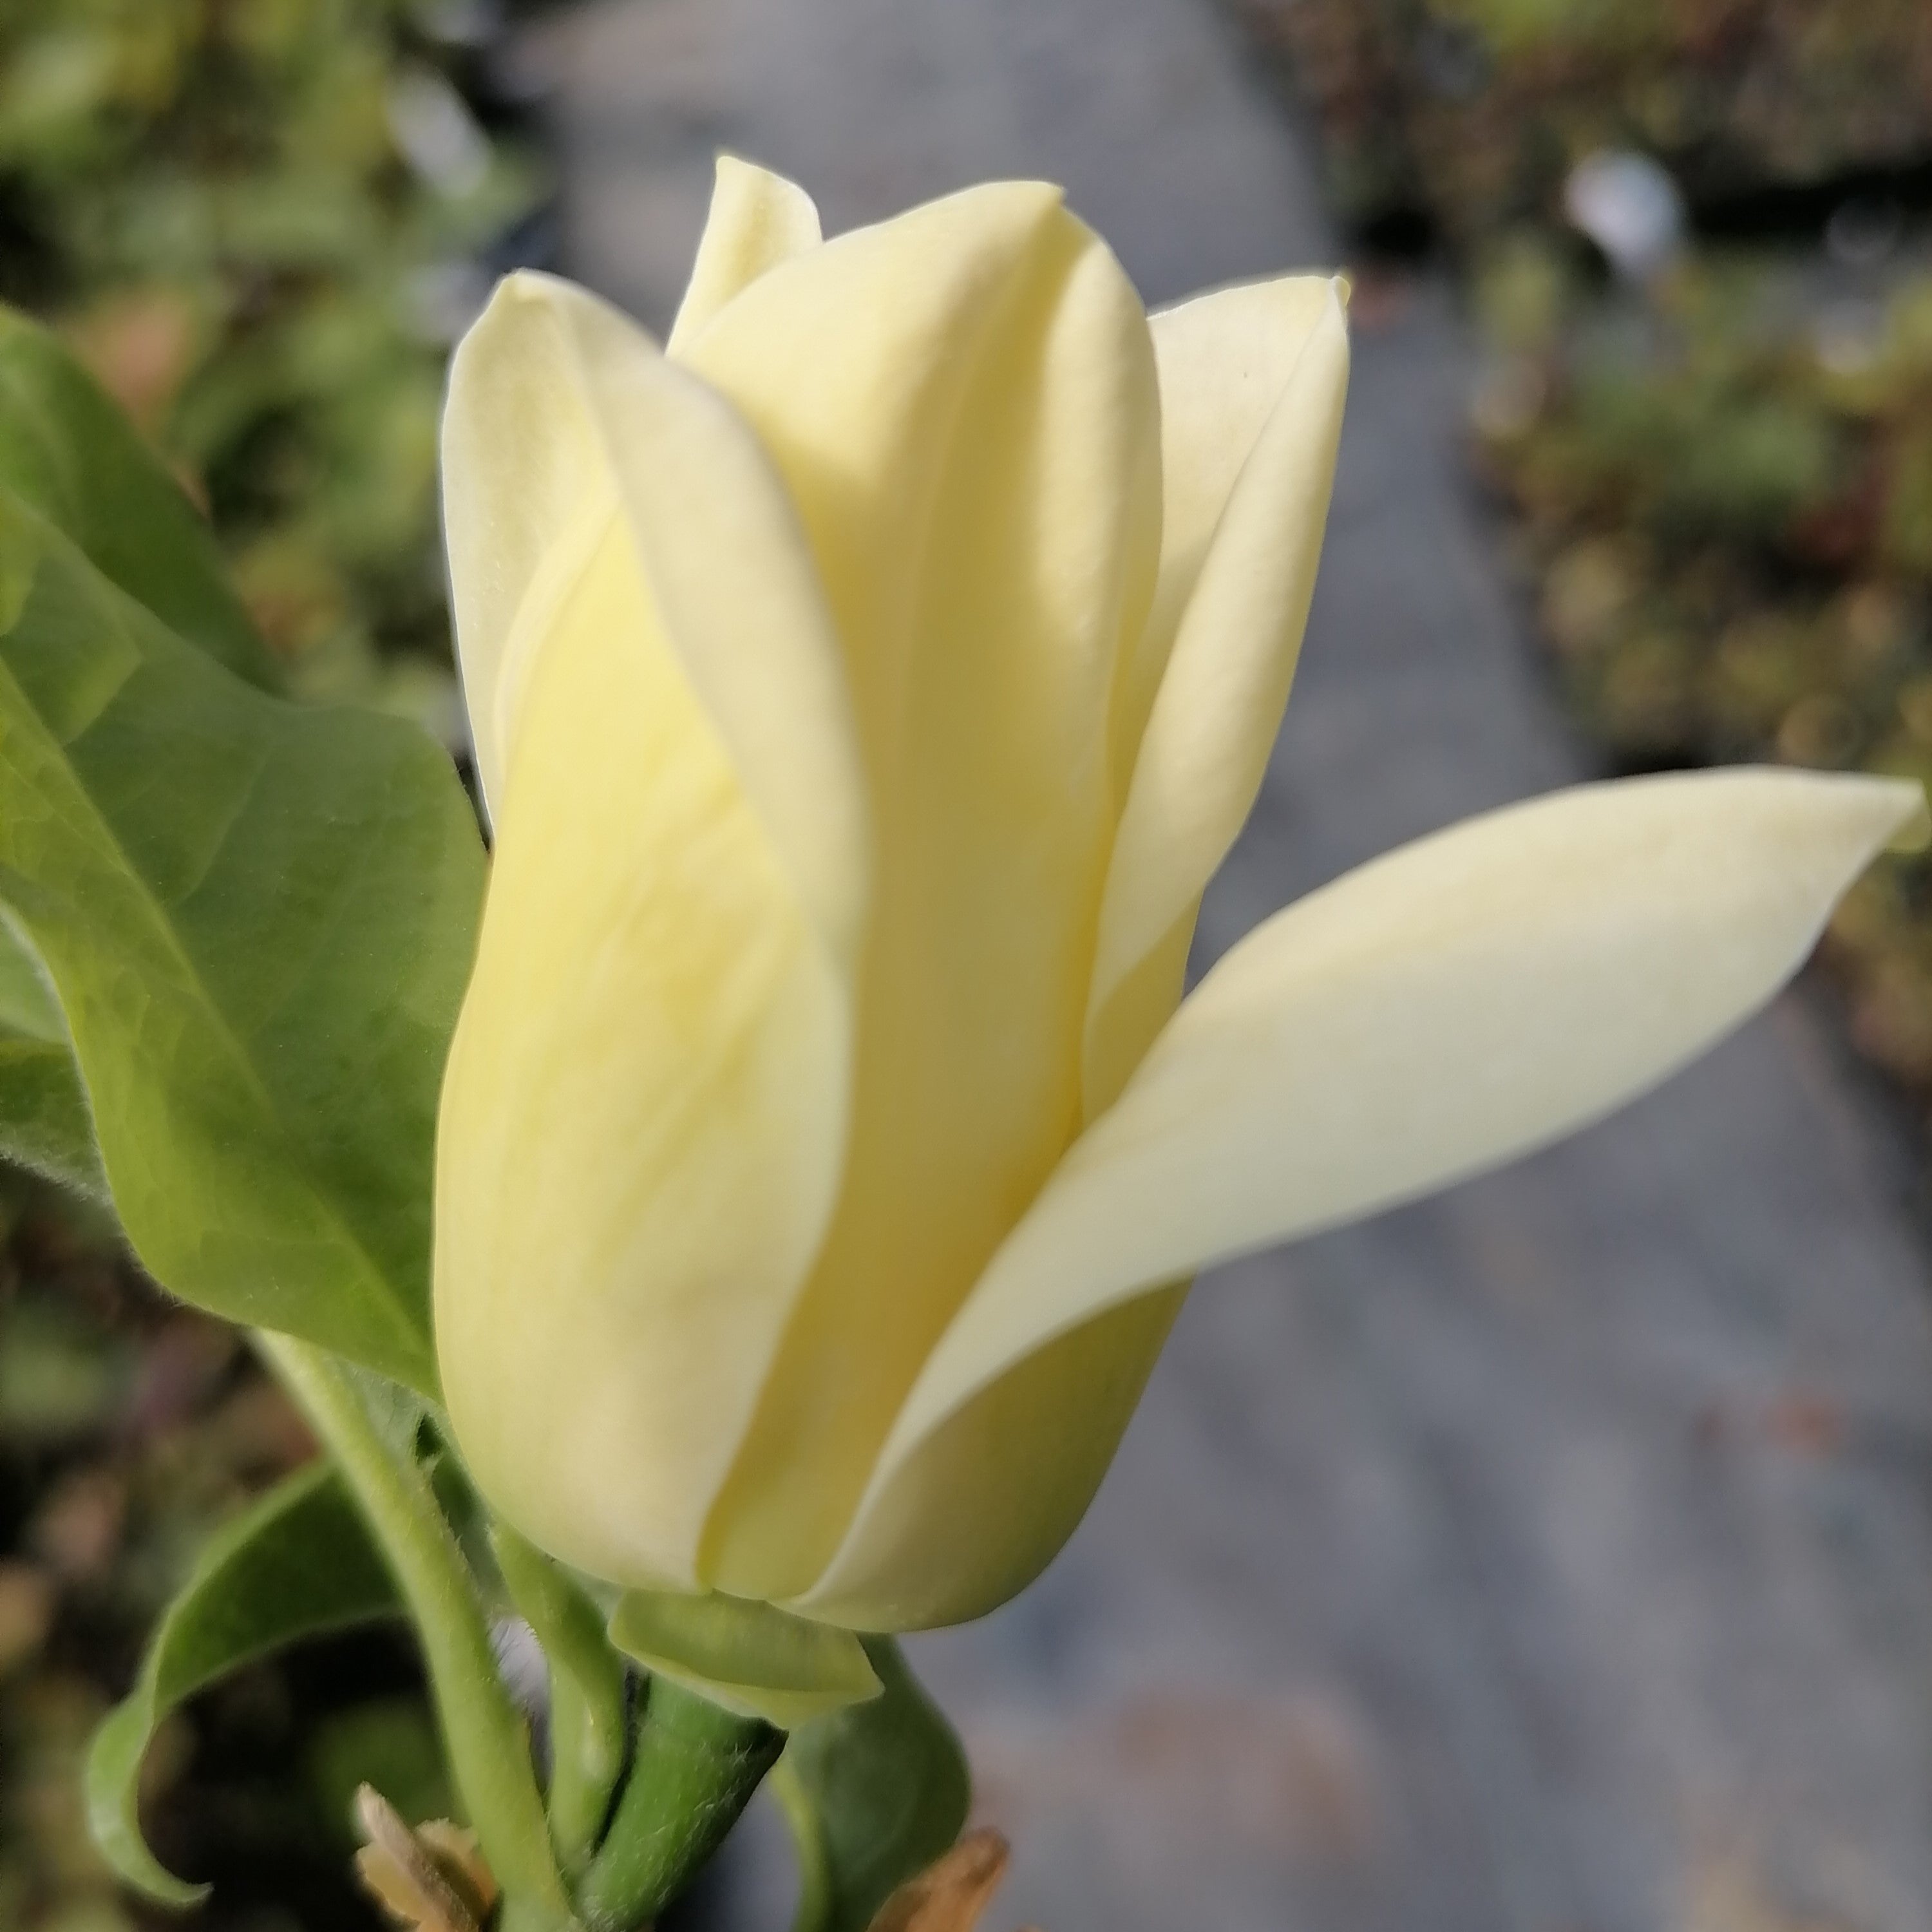 Magnolia x brooklynensis "Yellow Bird"